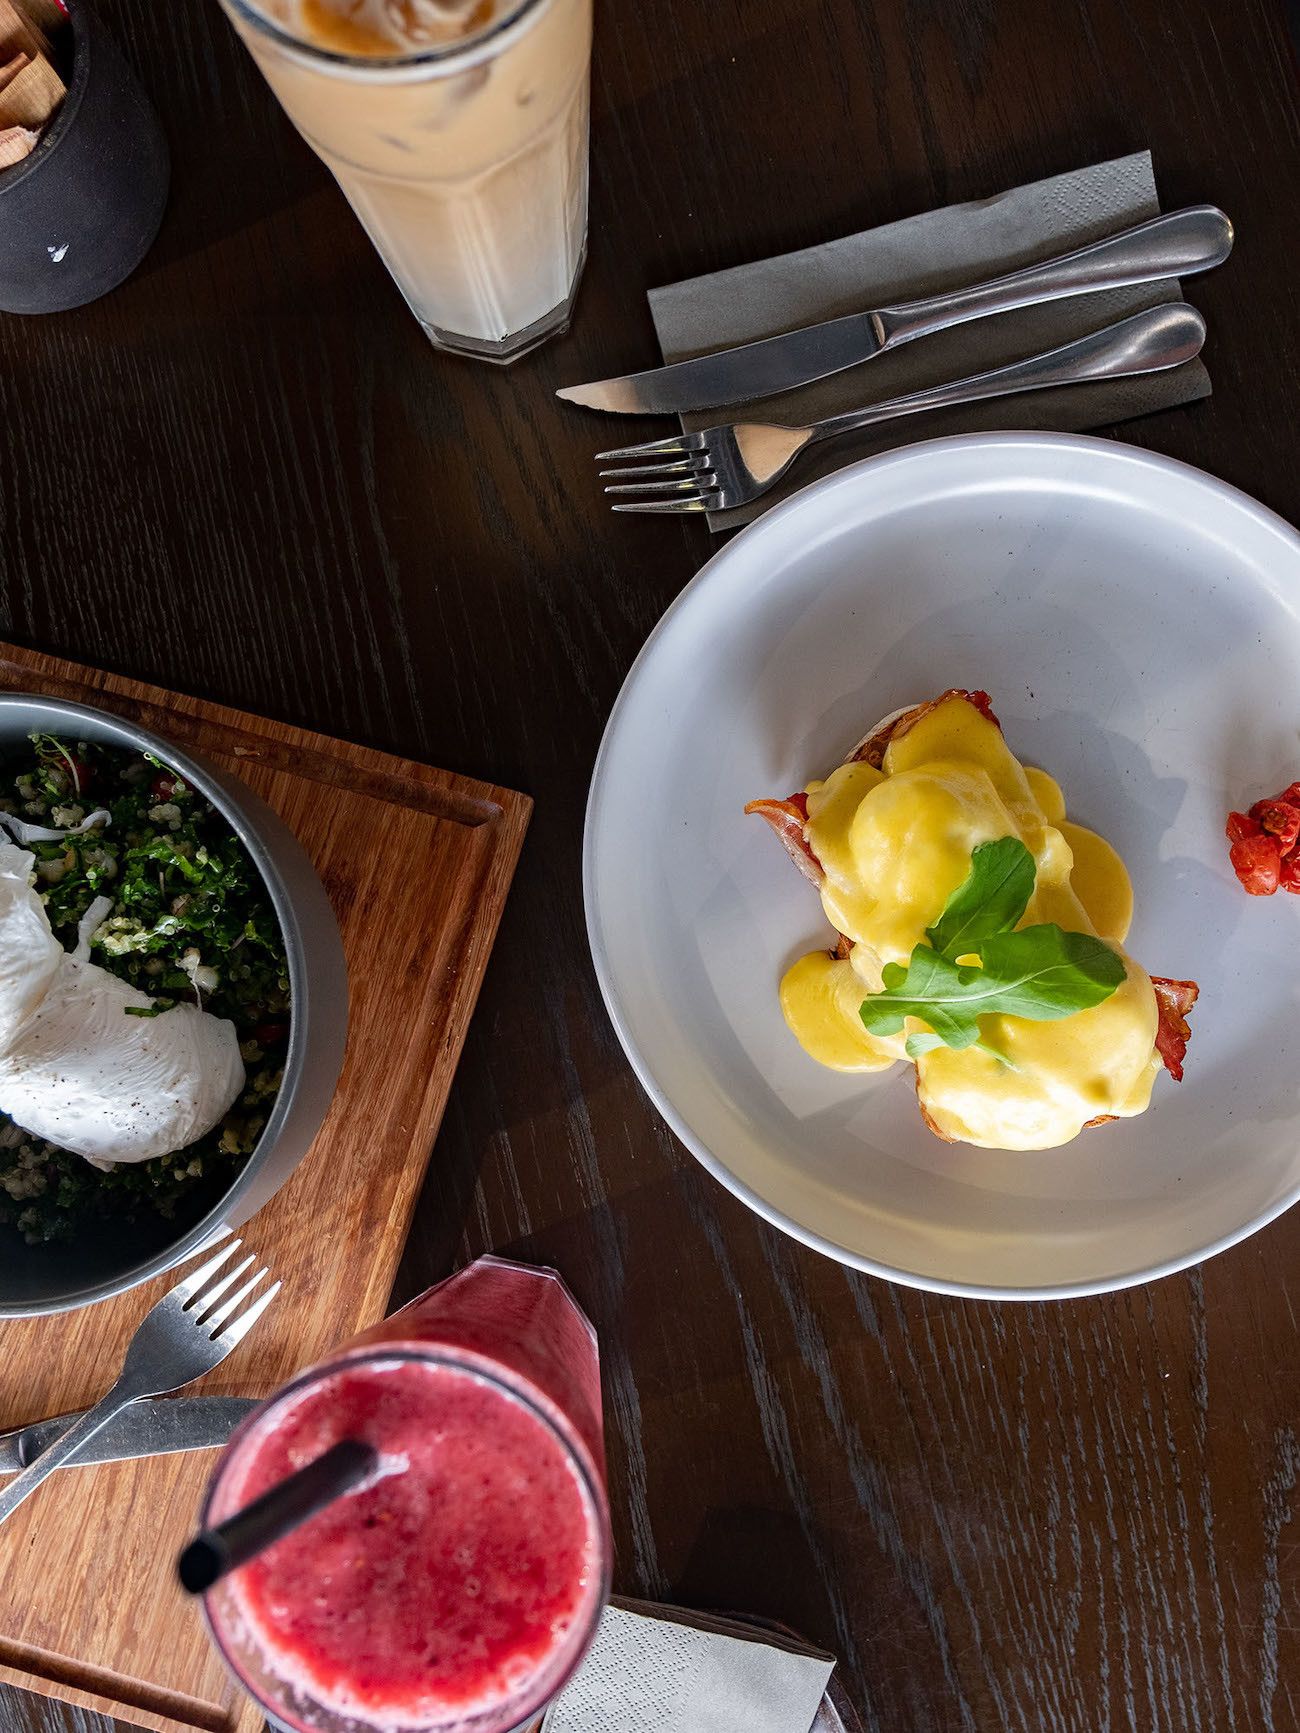 Frühstücks - und Brunch Guide für Kapstadt, Dapper, Eggs Benedict, Smoothie, Breakfast Bowl